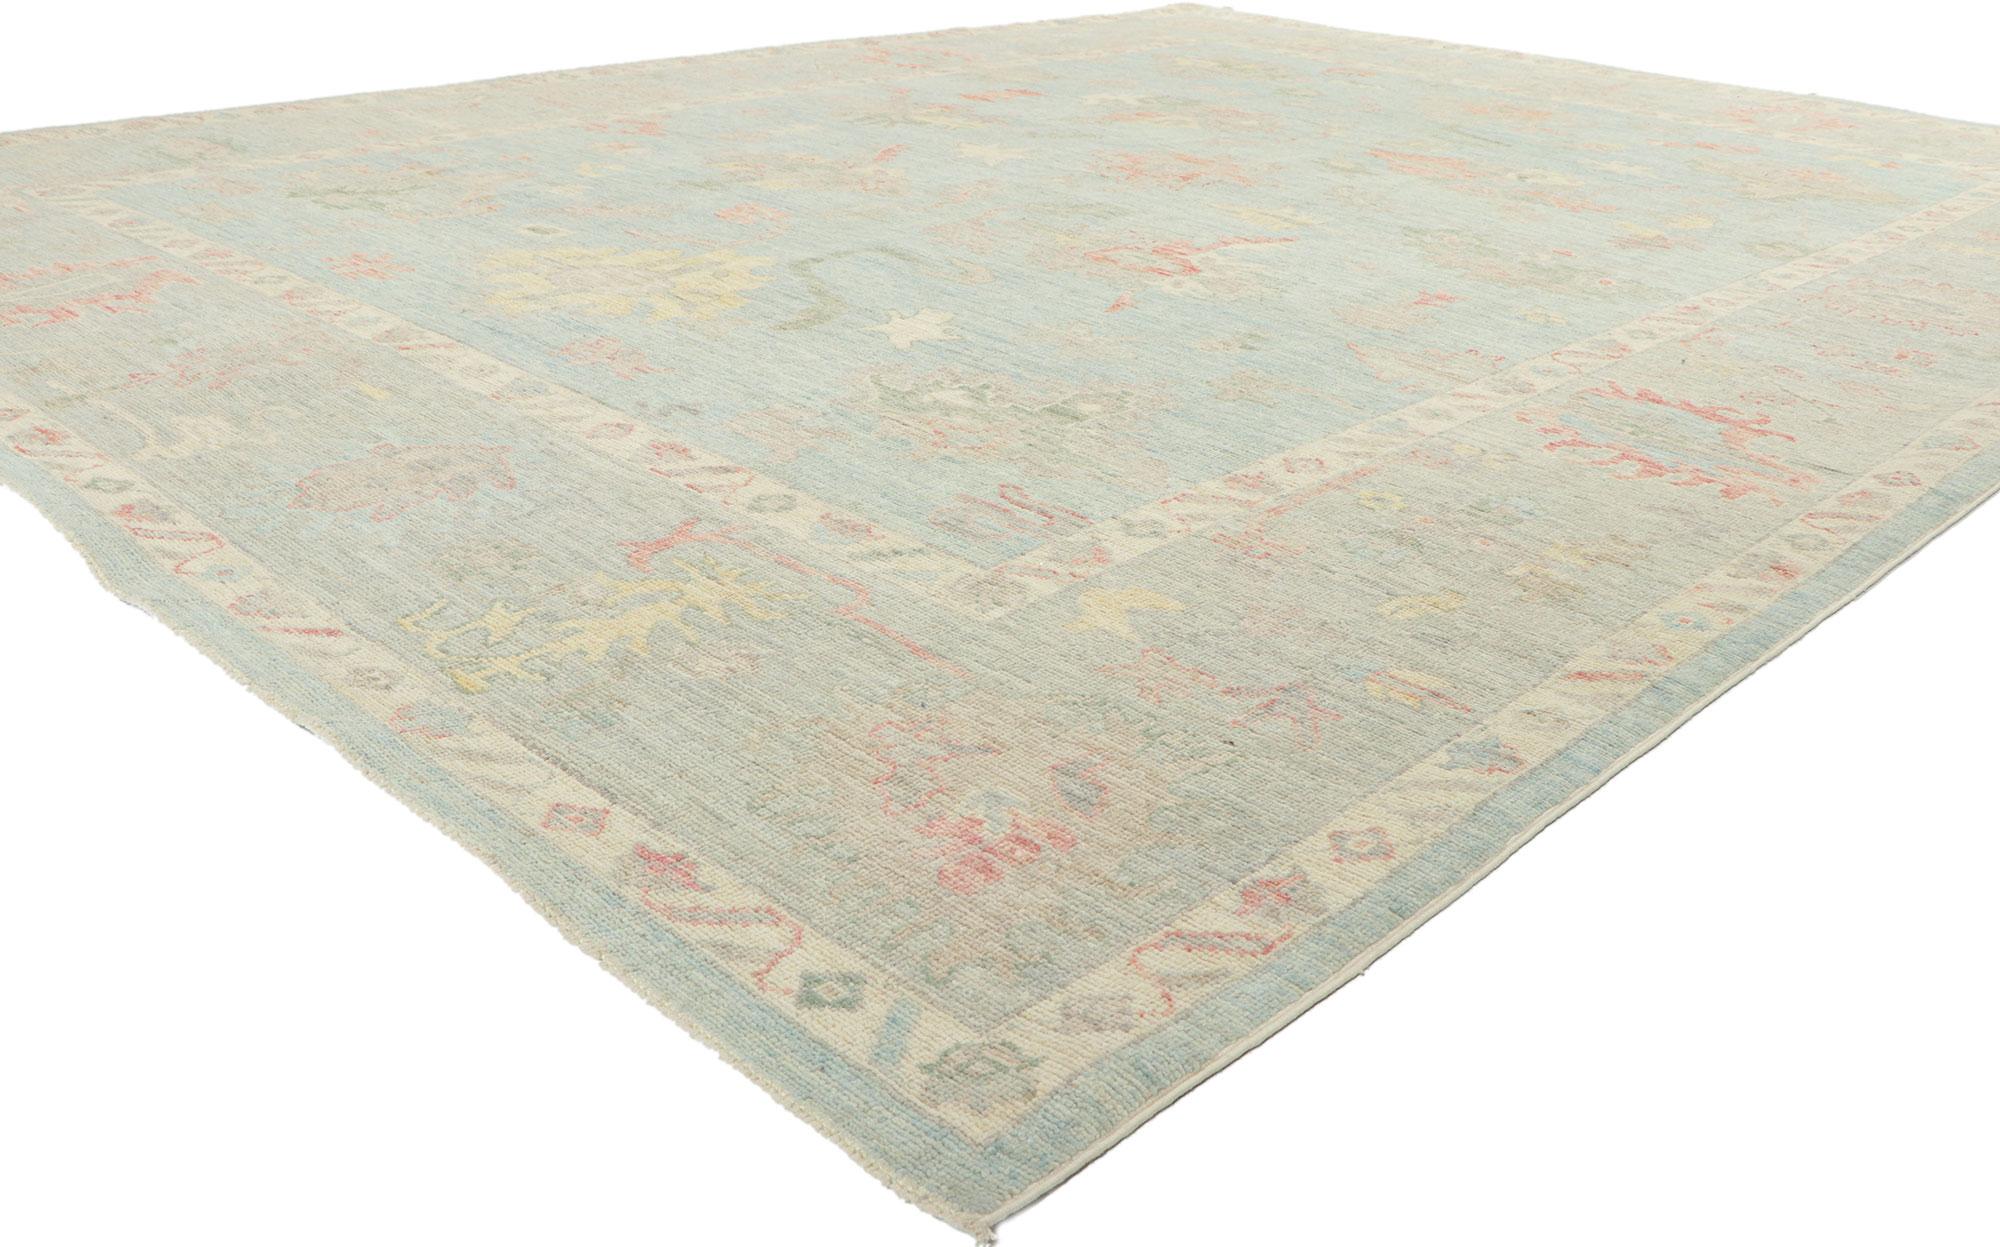 80903 New Contemporary Oushak rug, 09'01 x 11'10.